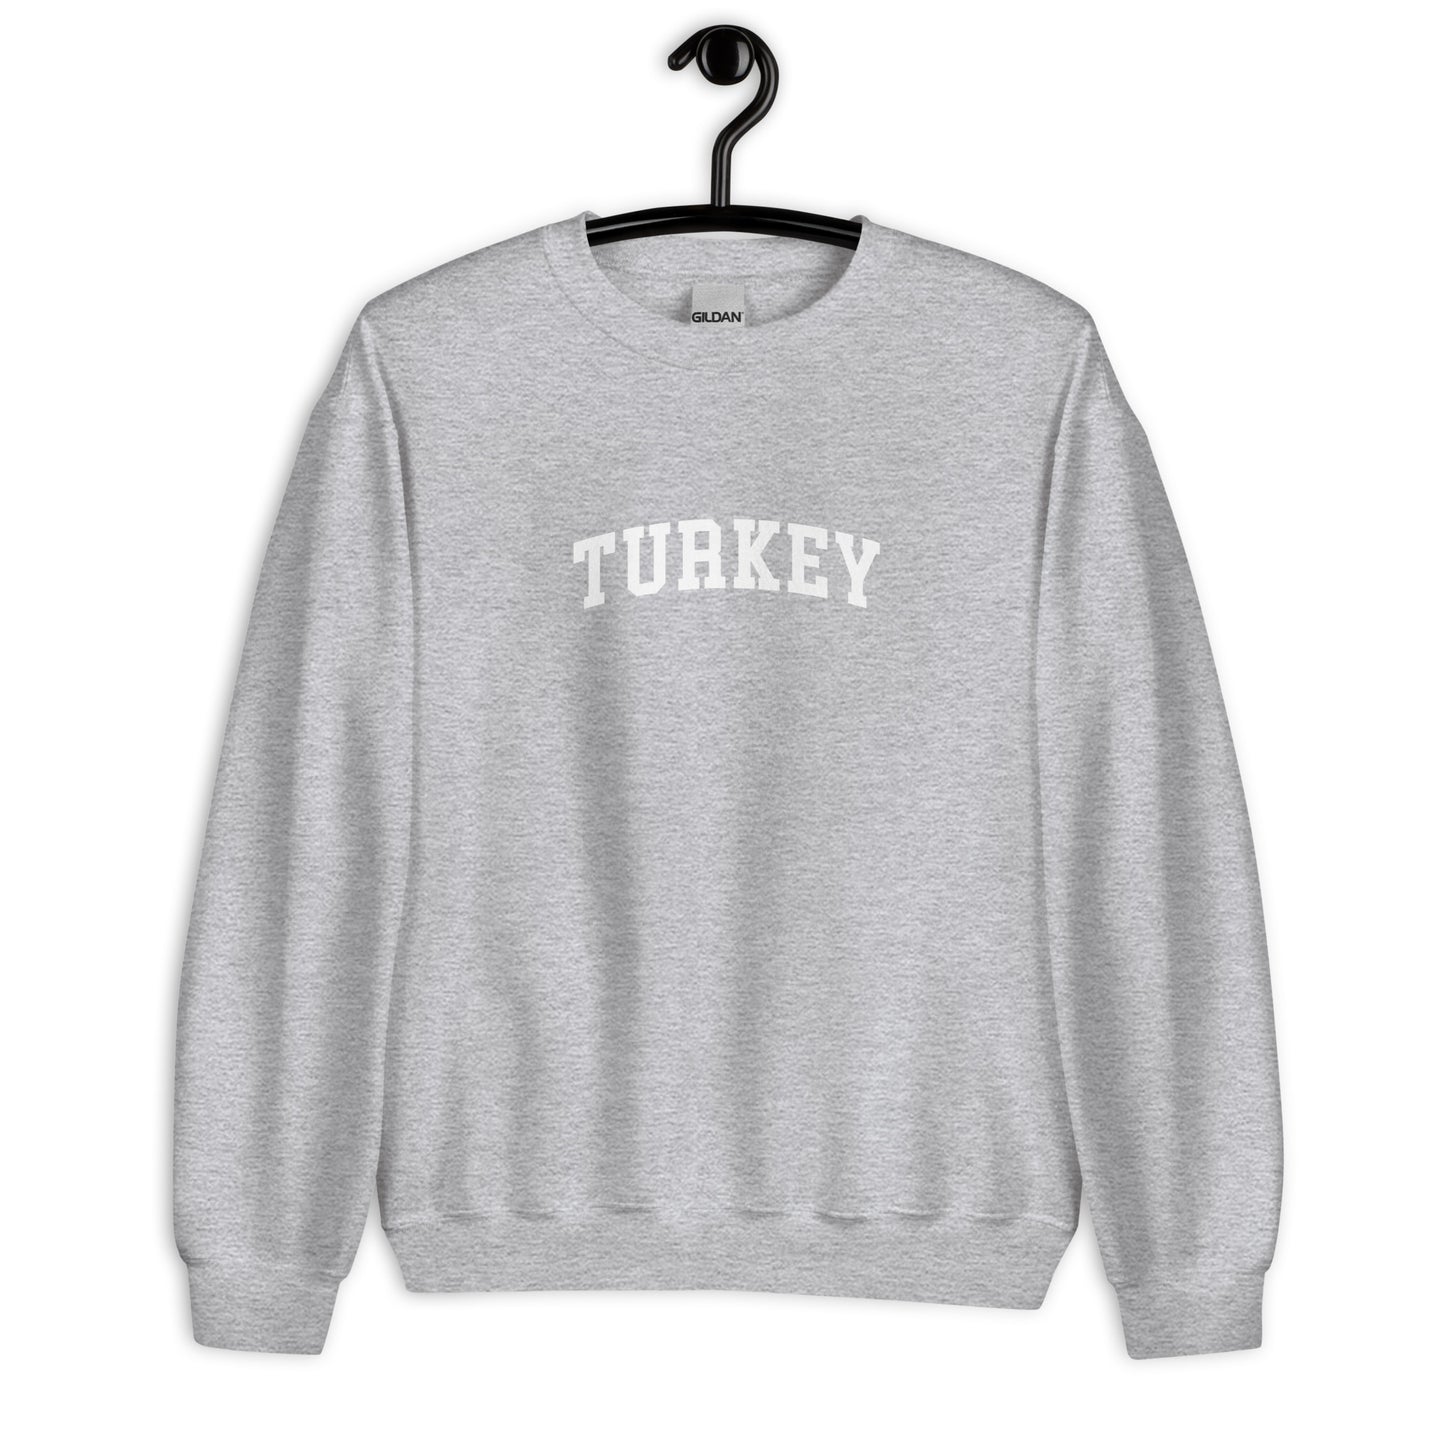 Turkey Sweatshirt - Arched Font